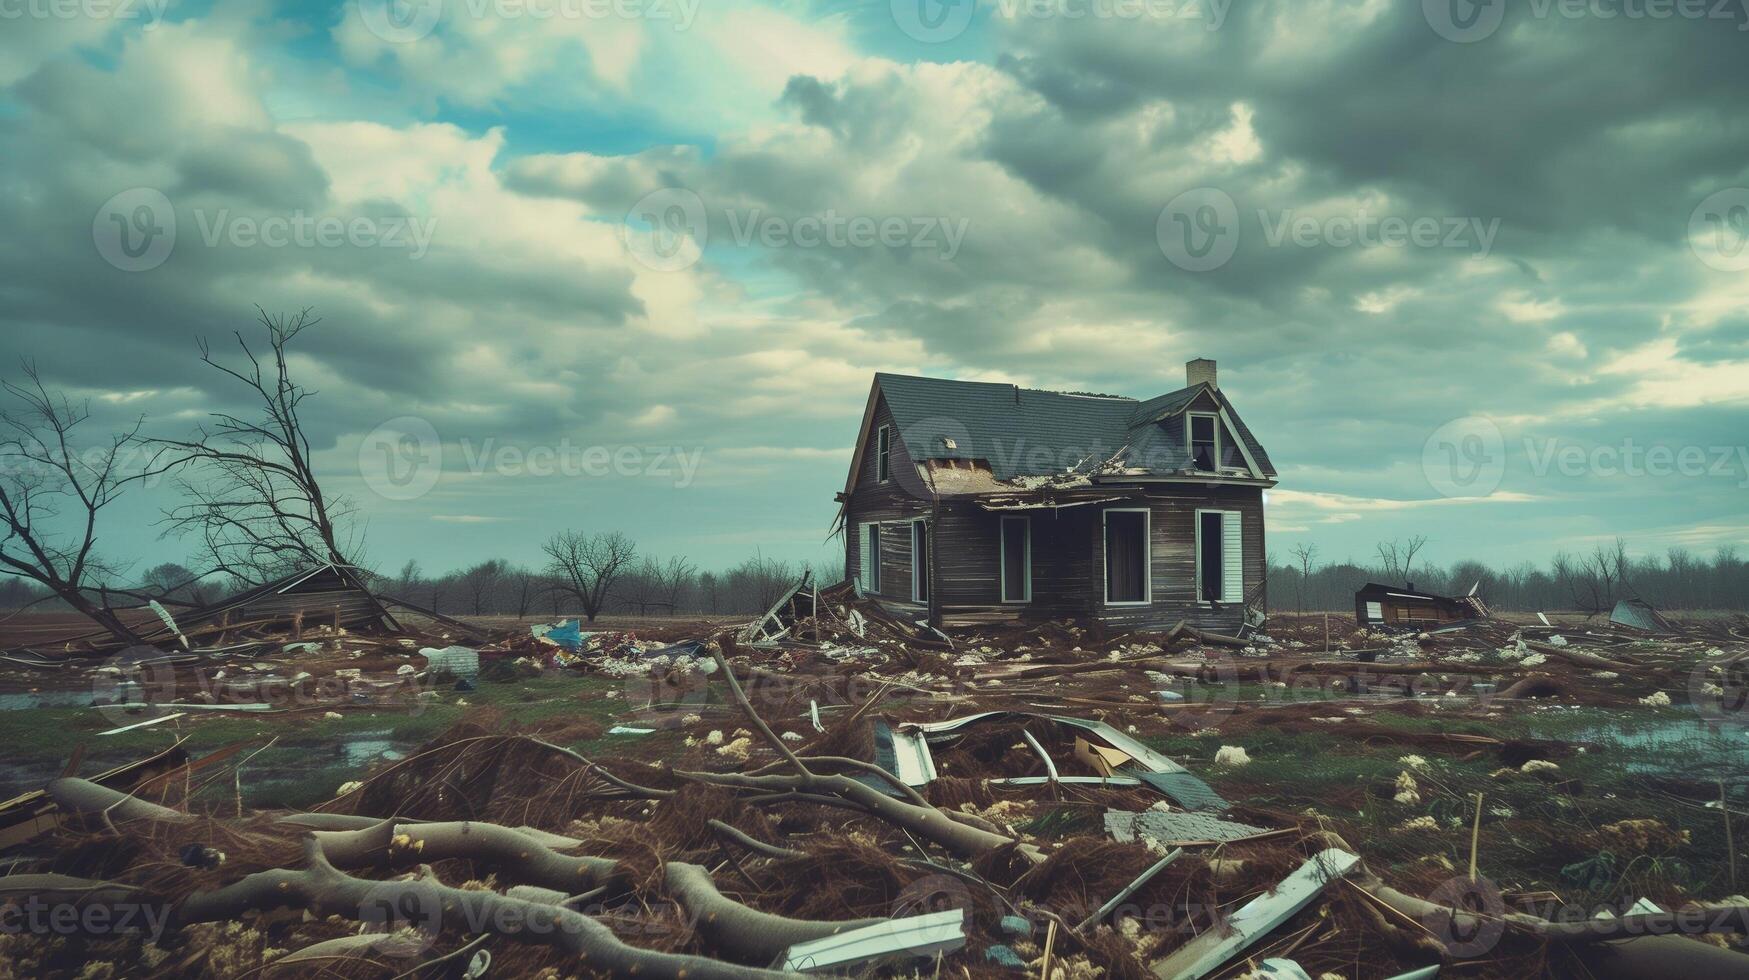 lone house standing after a devastating tornado, debris scattered around photo